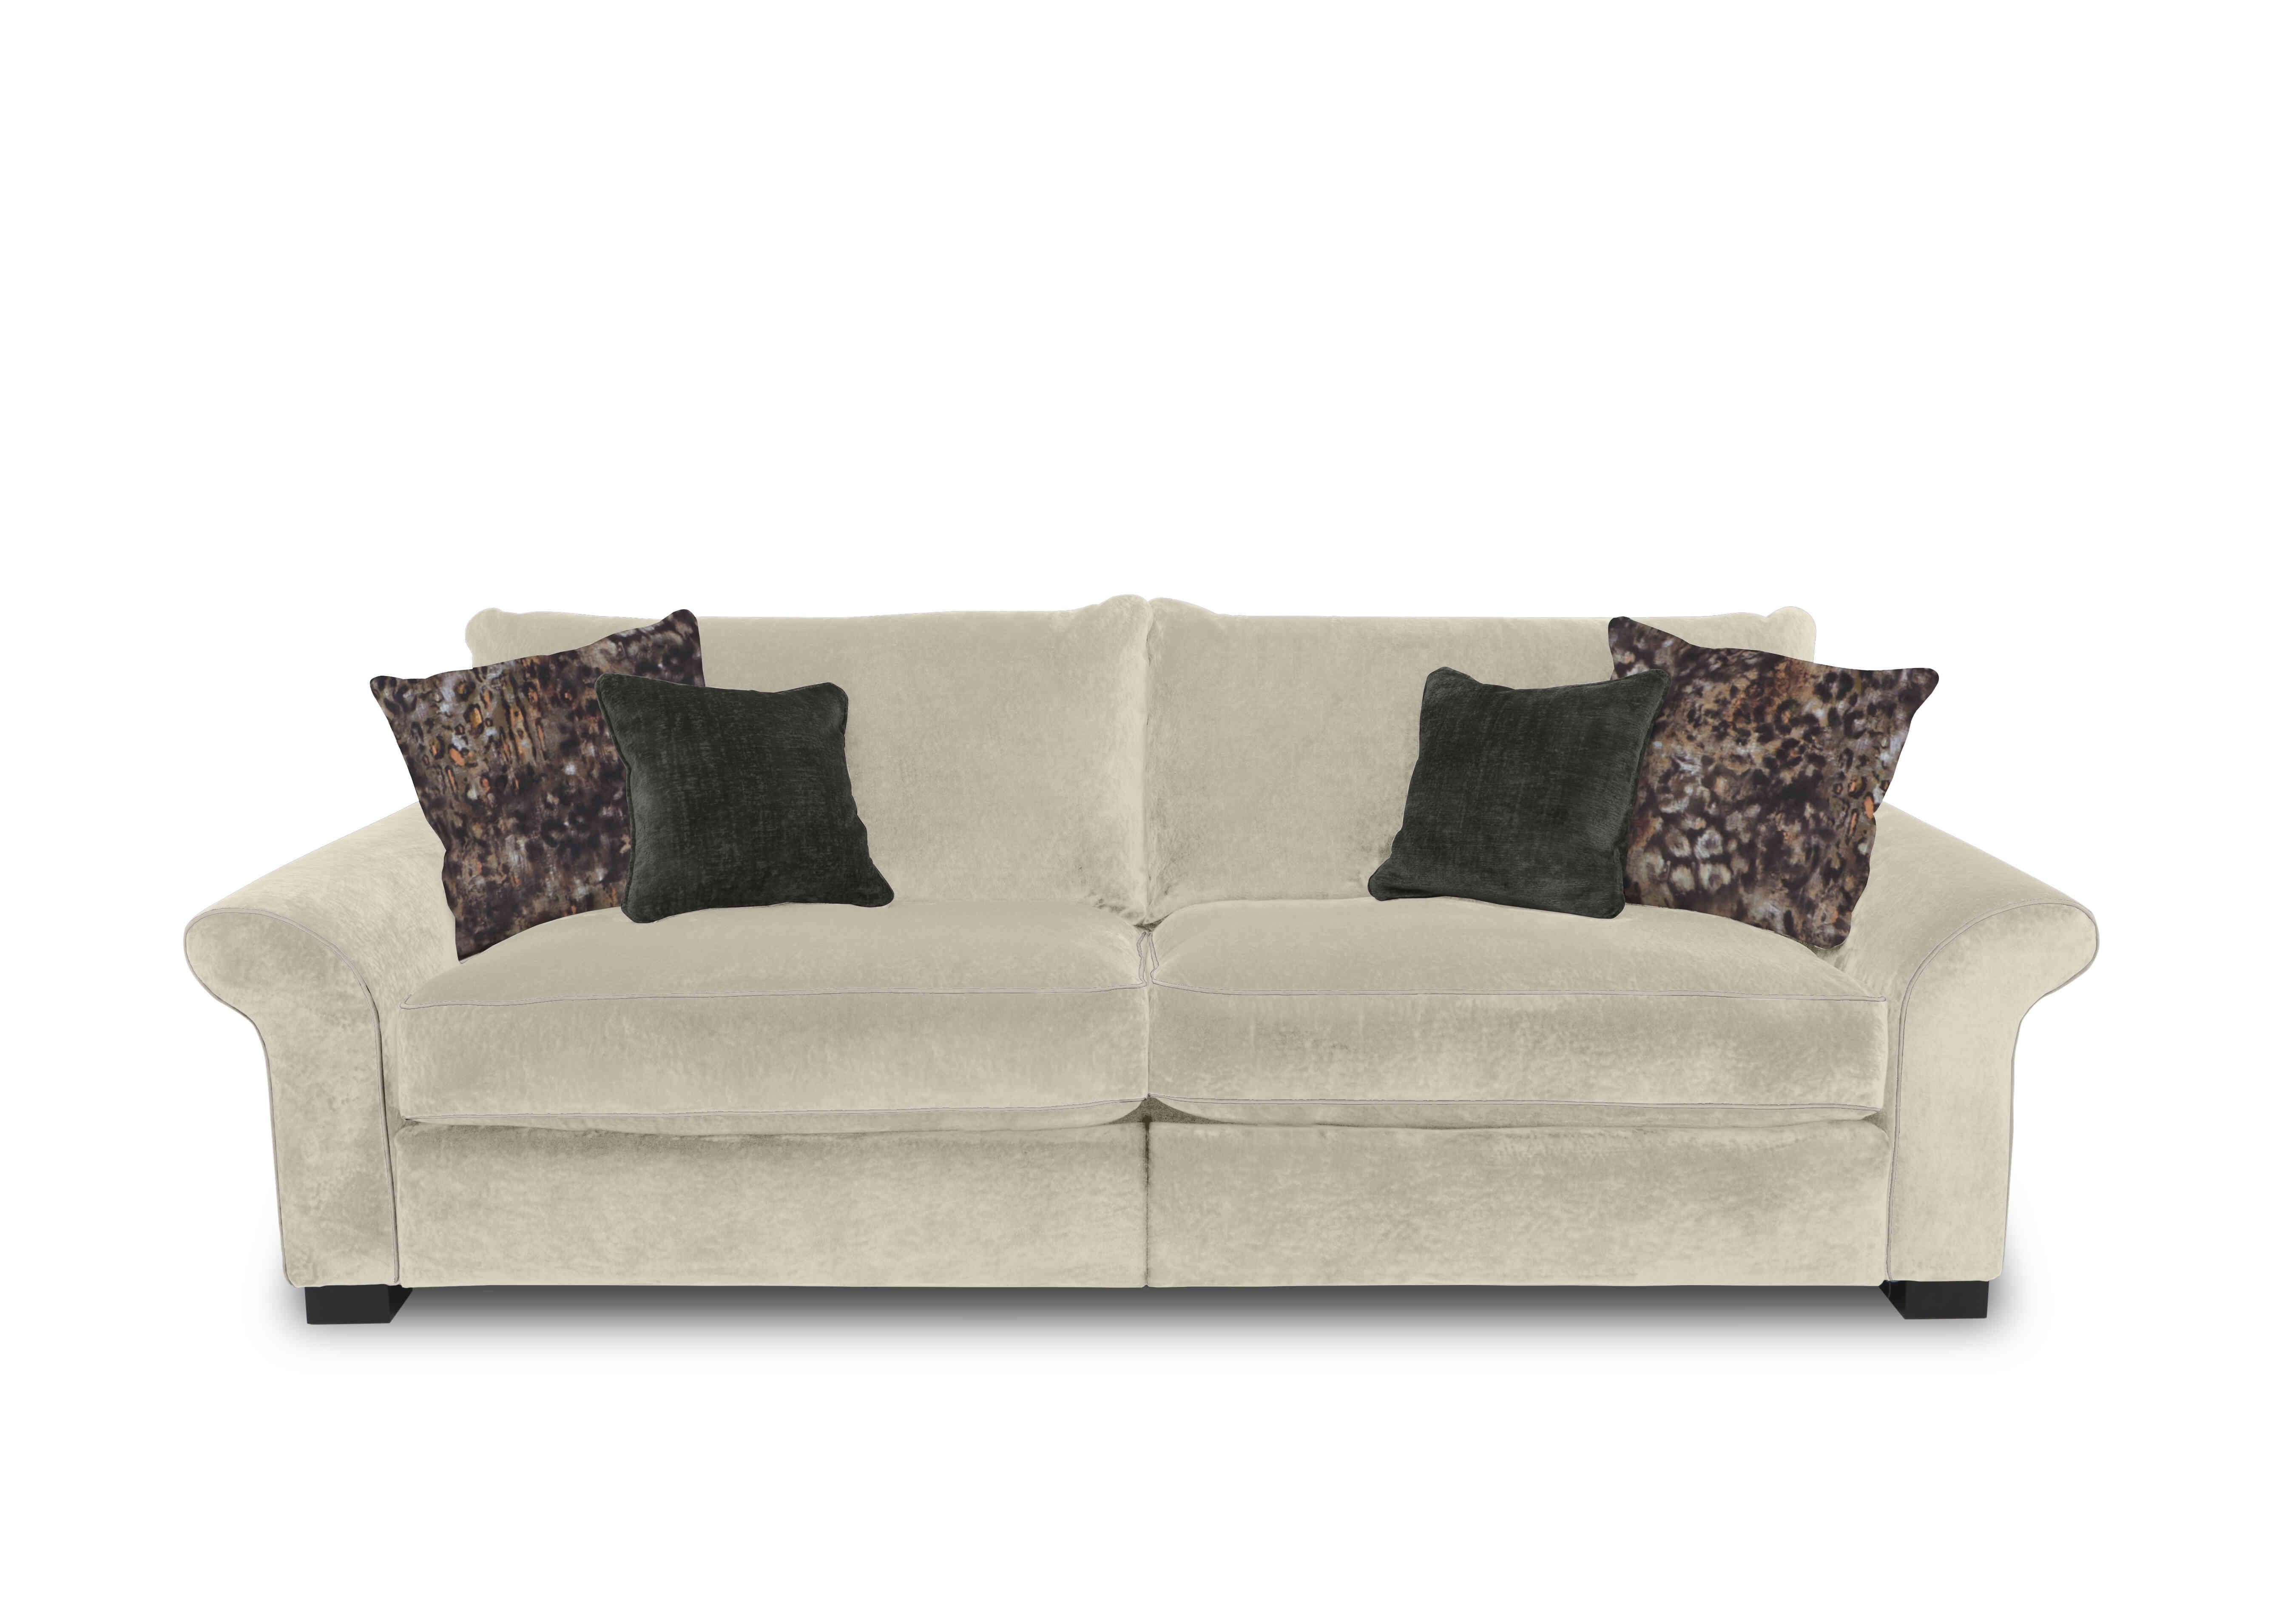 Modern Classics Hyde Park 4 Seater Split Frame Sofa in Remini Pebble Sp Mf on Furniture Village